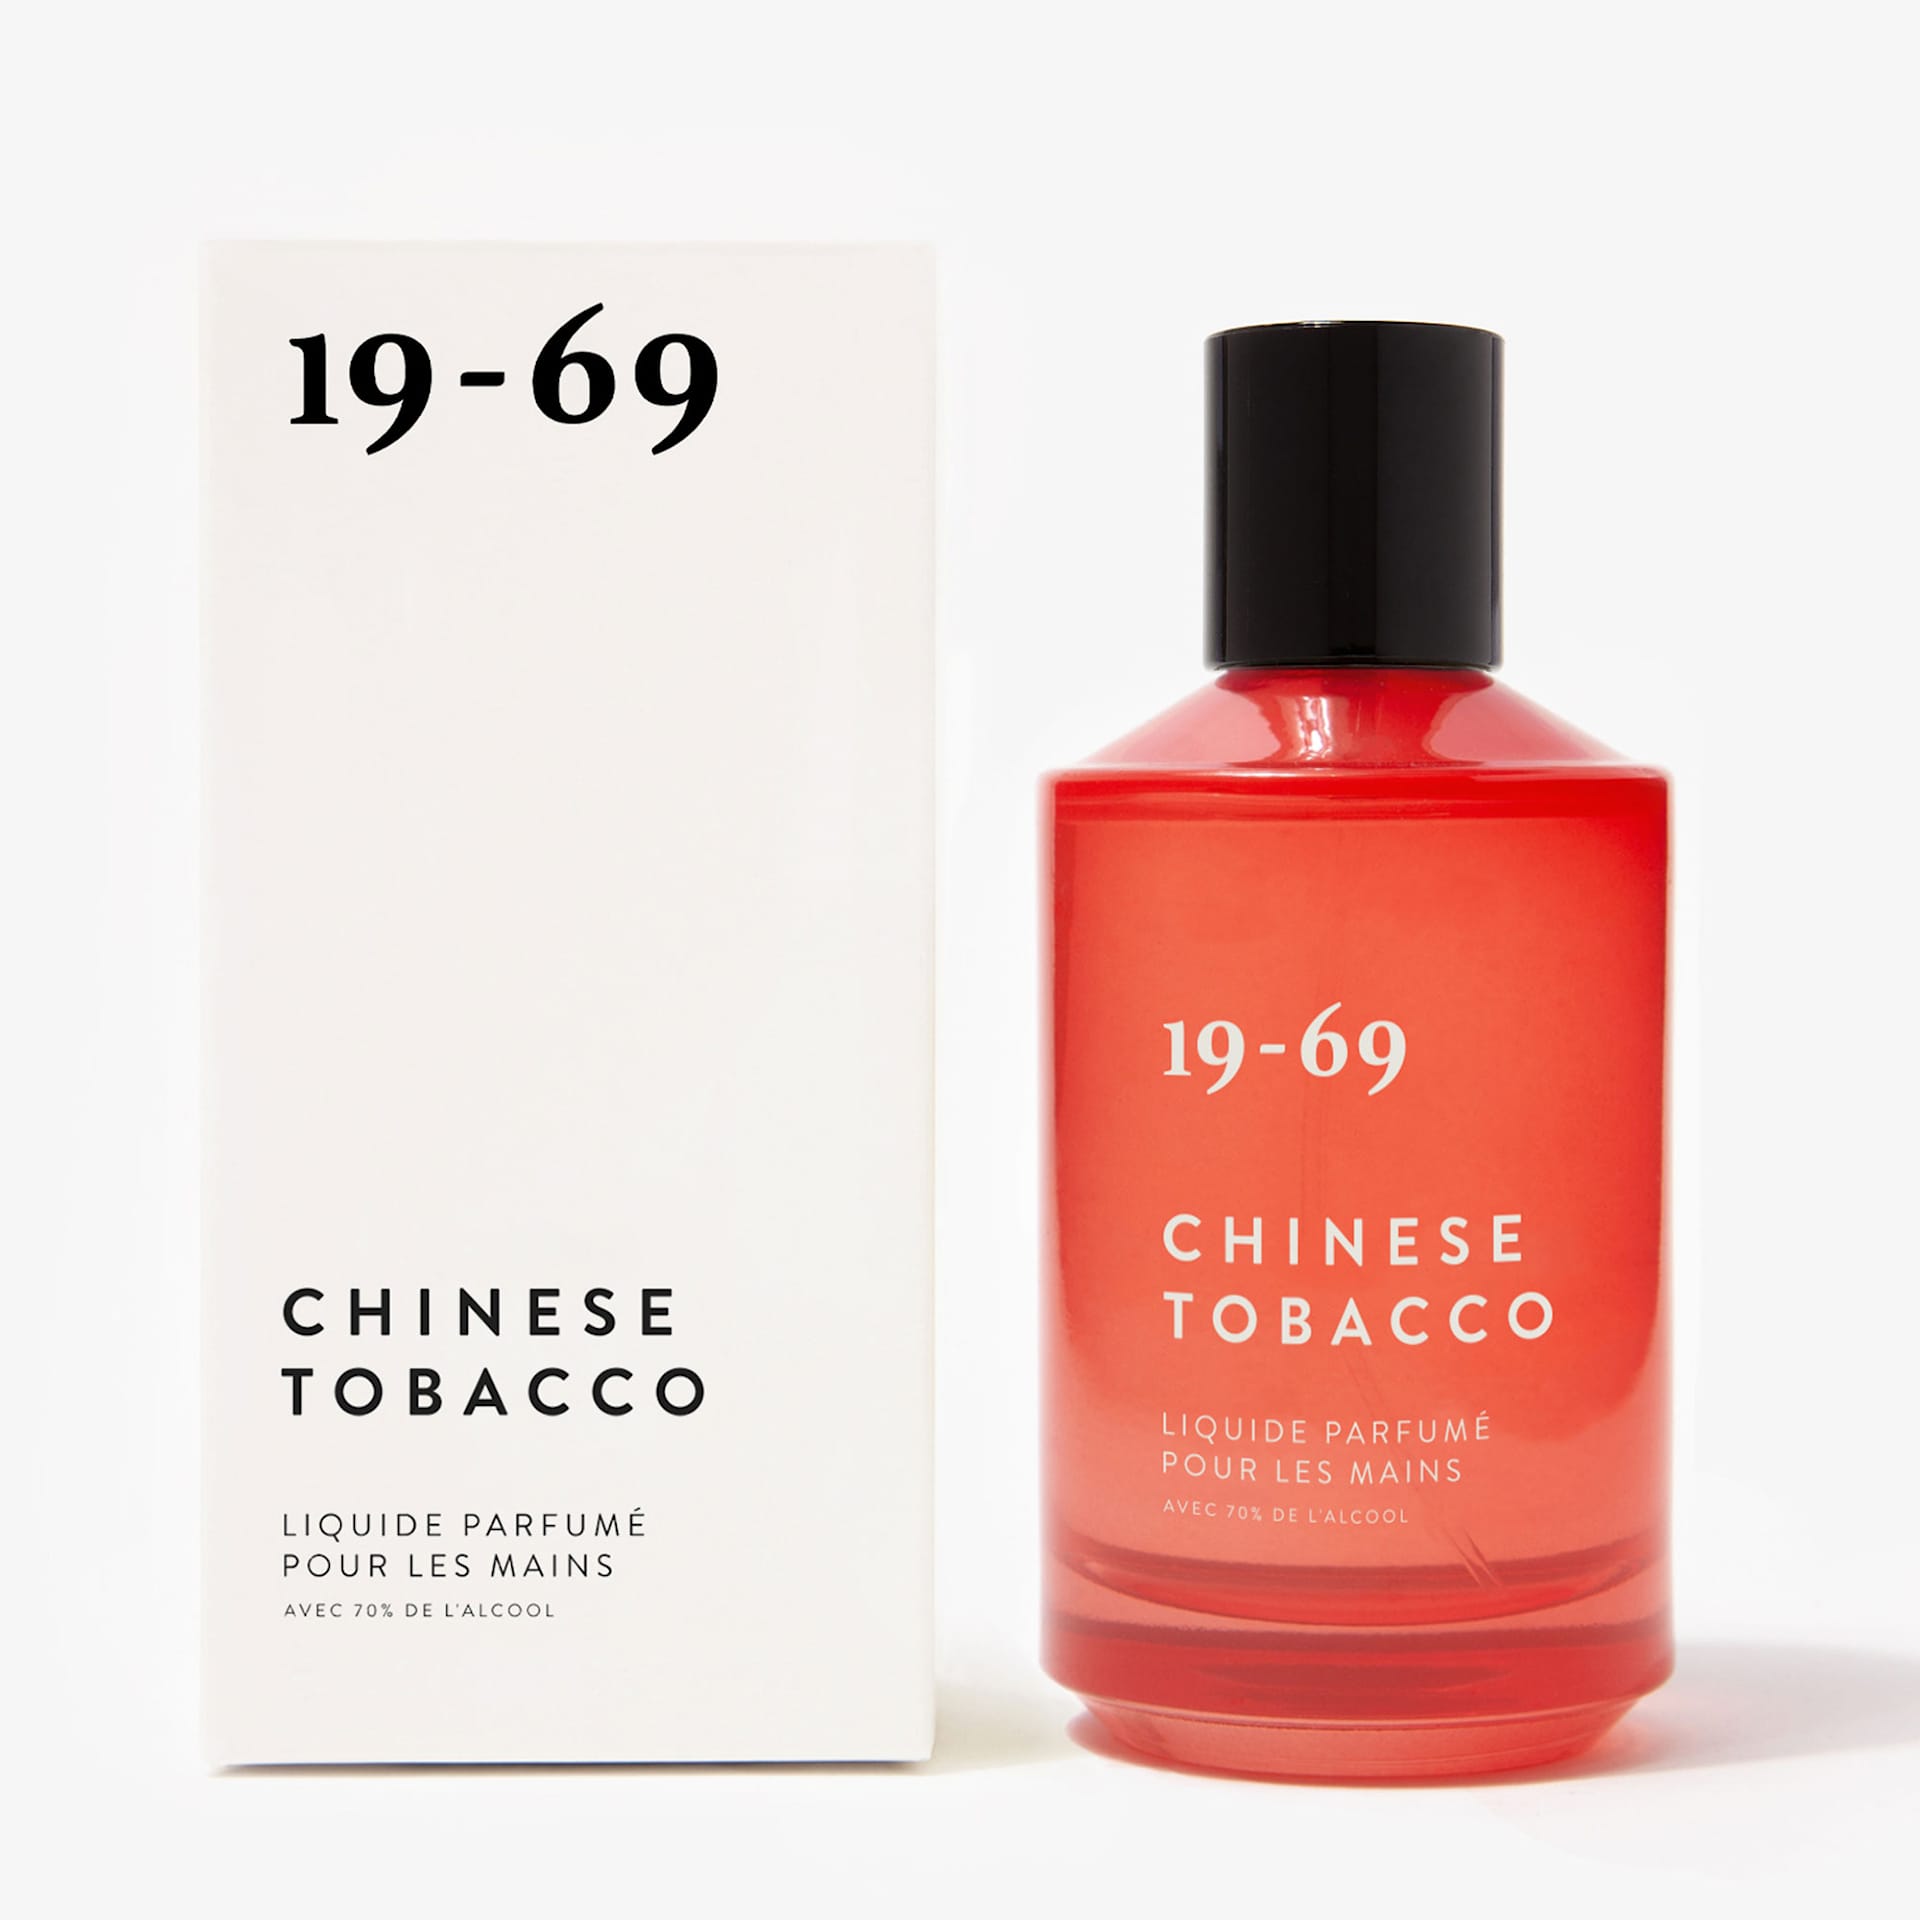 Chinese Tobacco Liquide Pour Le Mains - 19-69 - NO GA